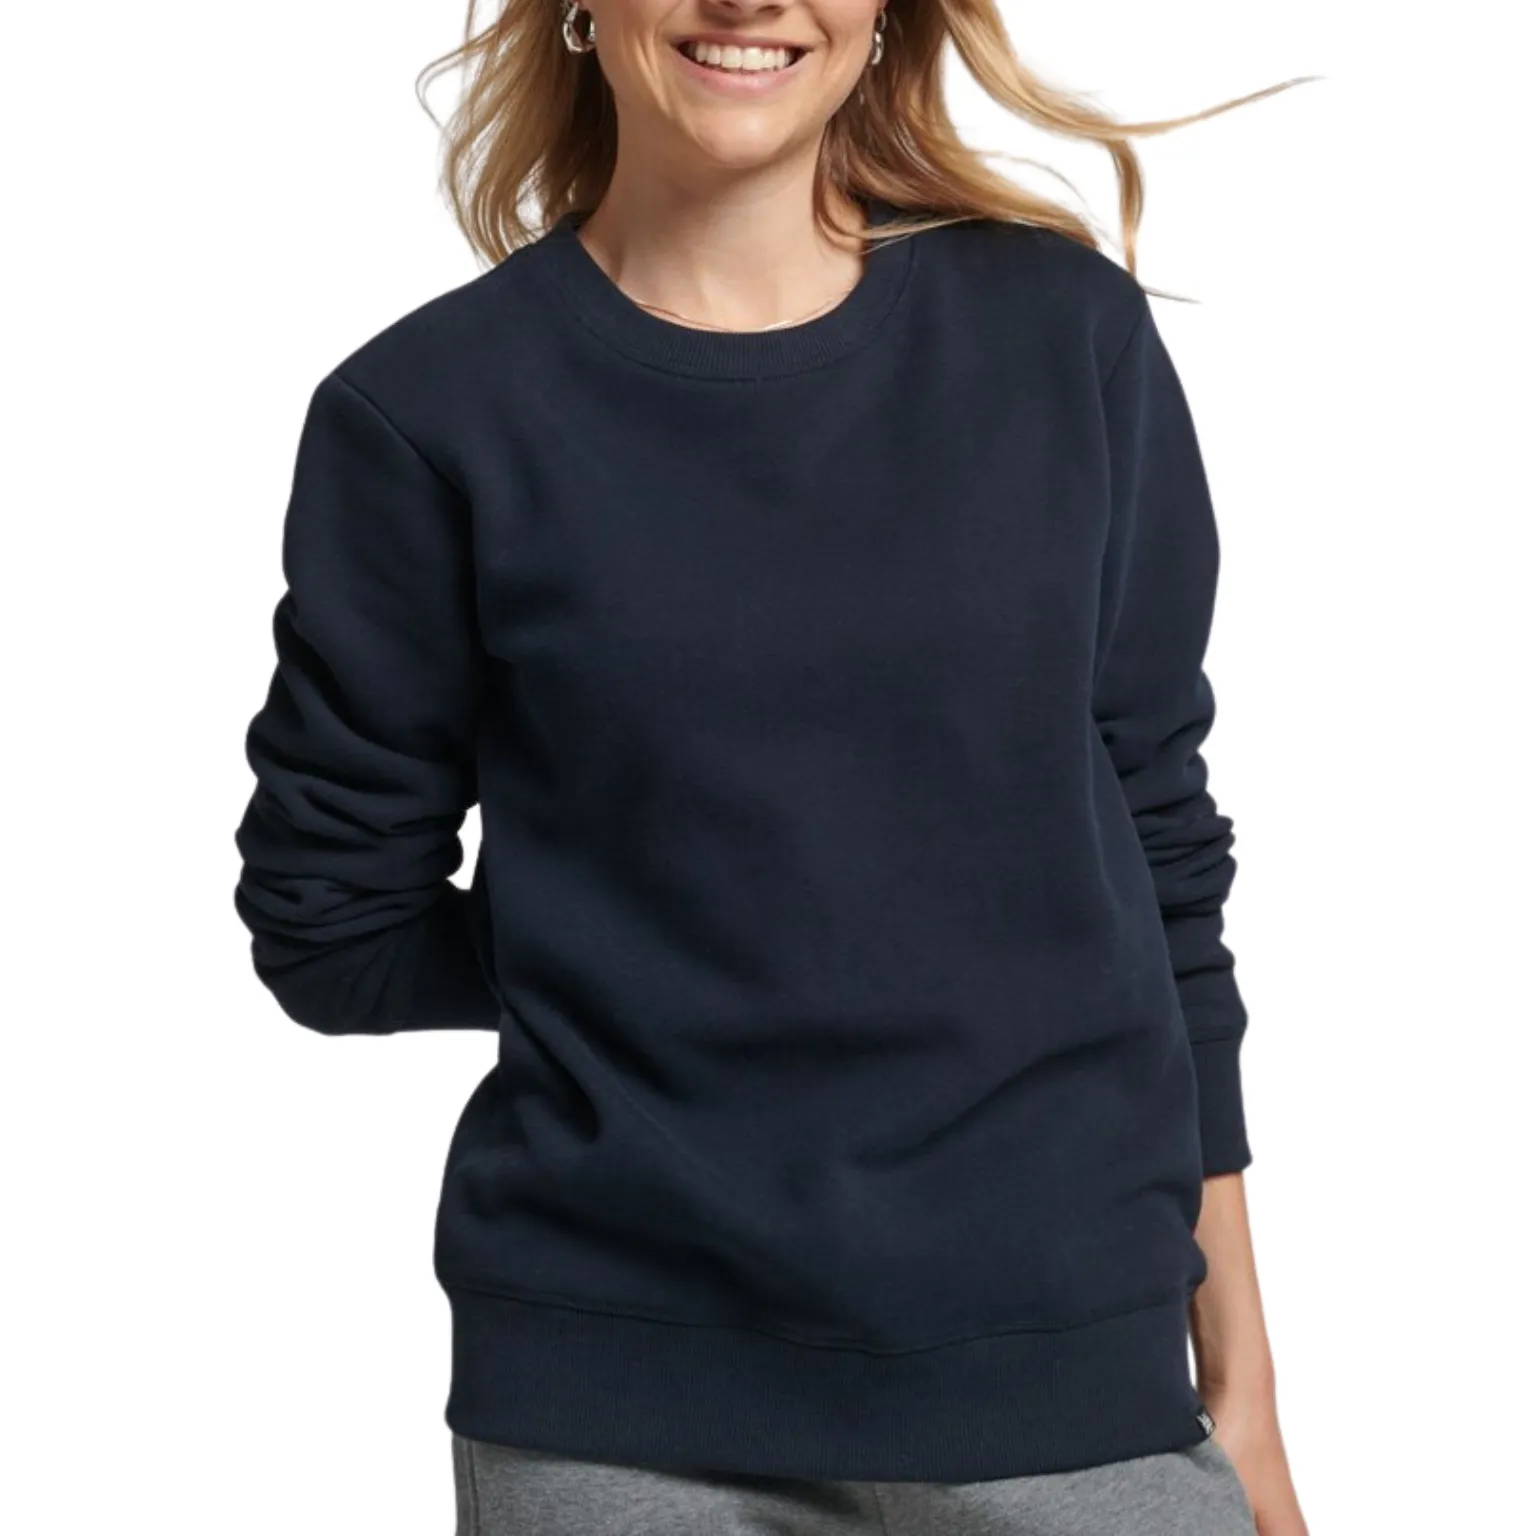 Cotton Sweatshirts manufacturing with trendy design